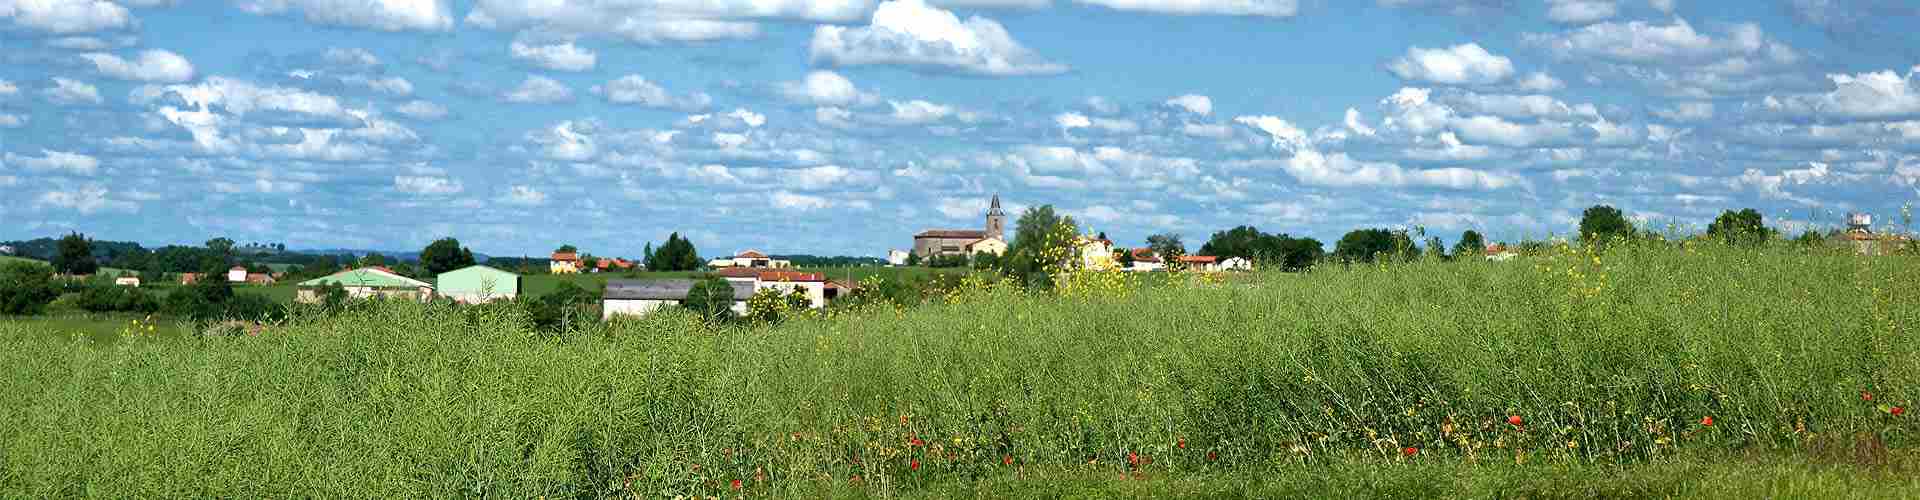 Casas rurales en España